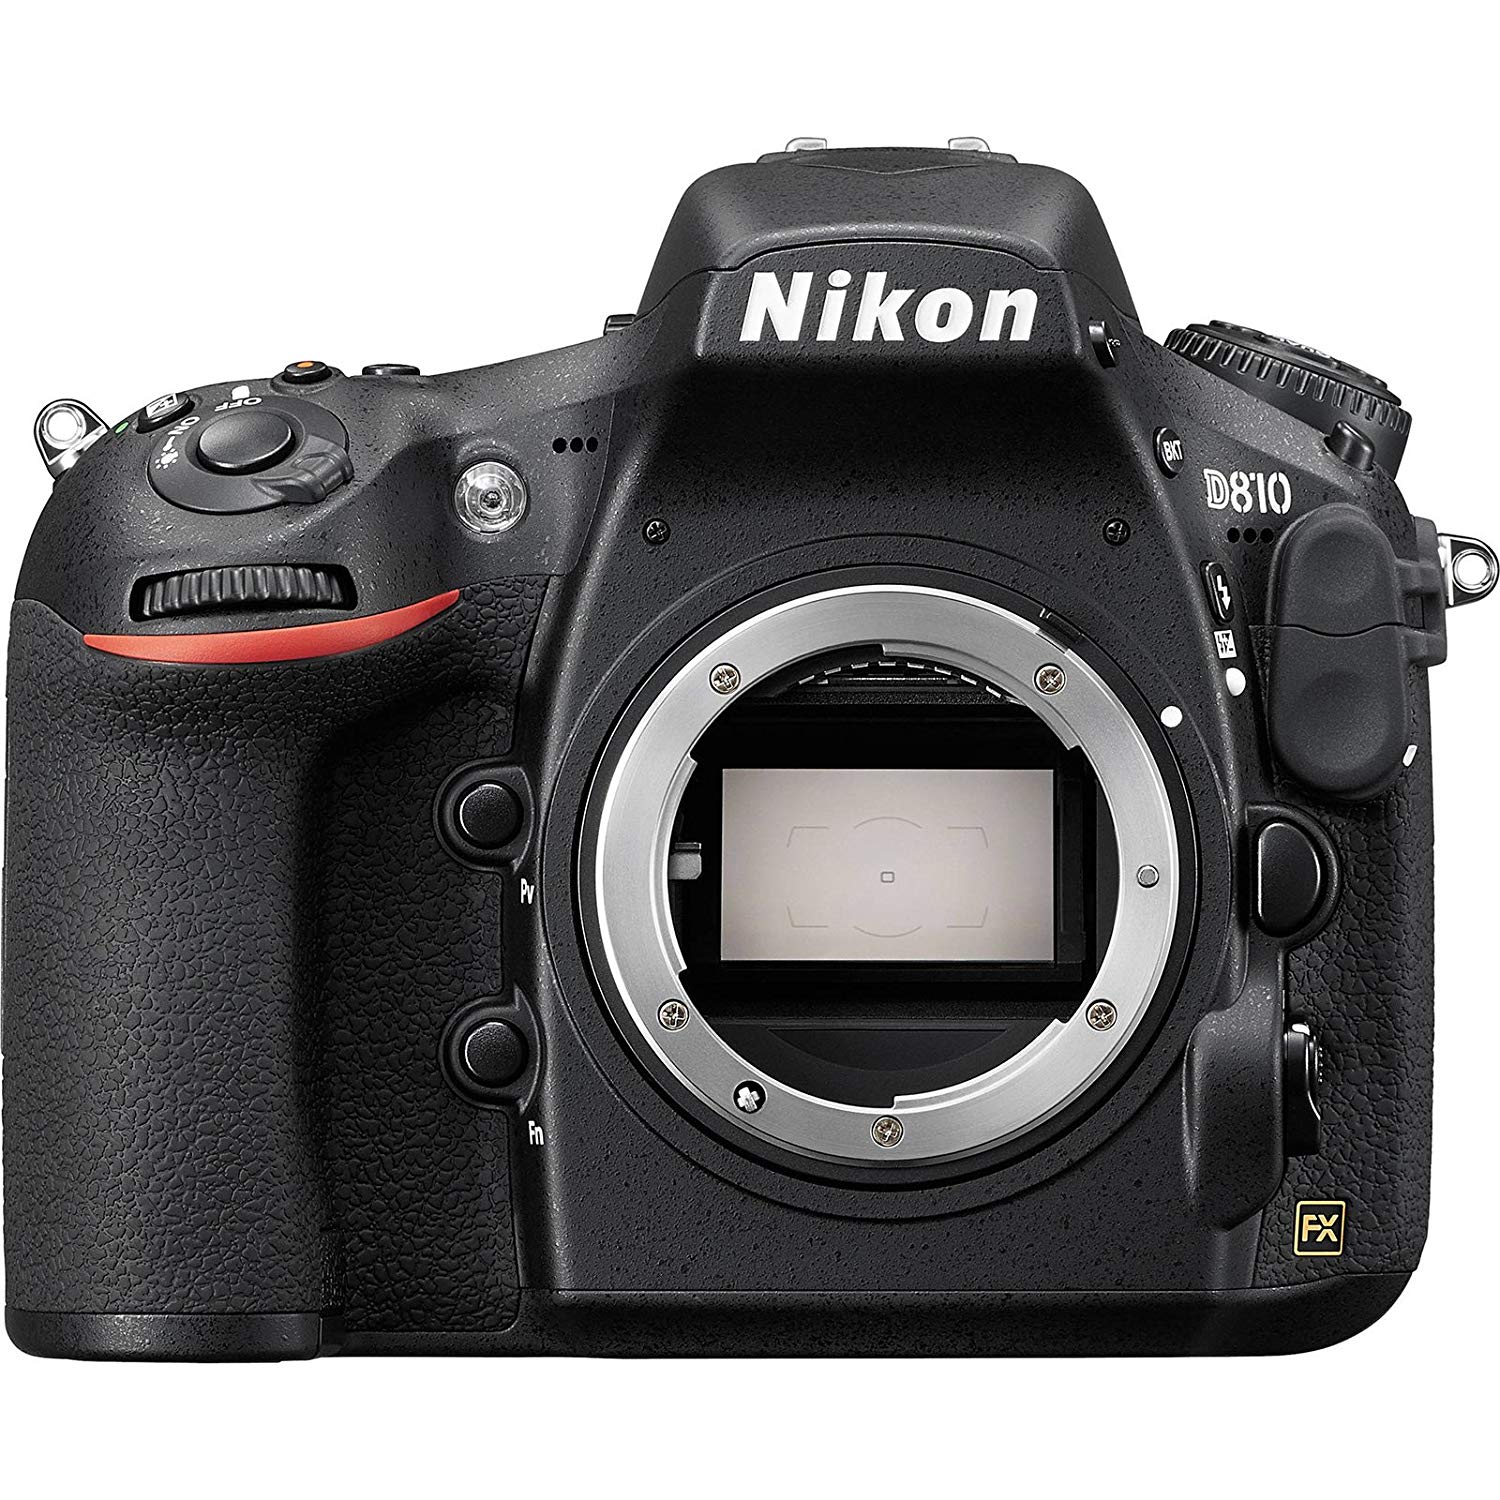 Nikon D810 디지털 SLR 카메라 본체 (리퍼브 제품 인증)...